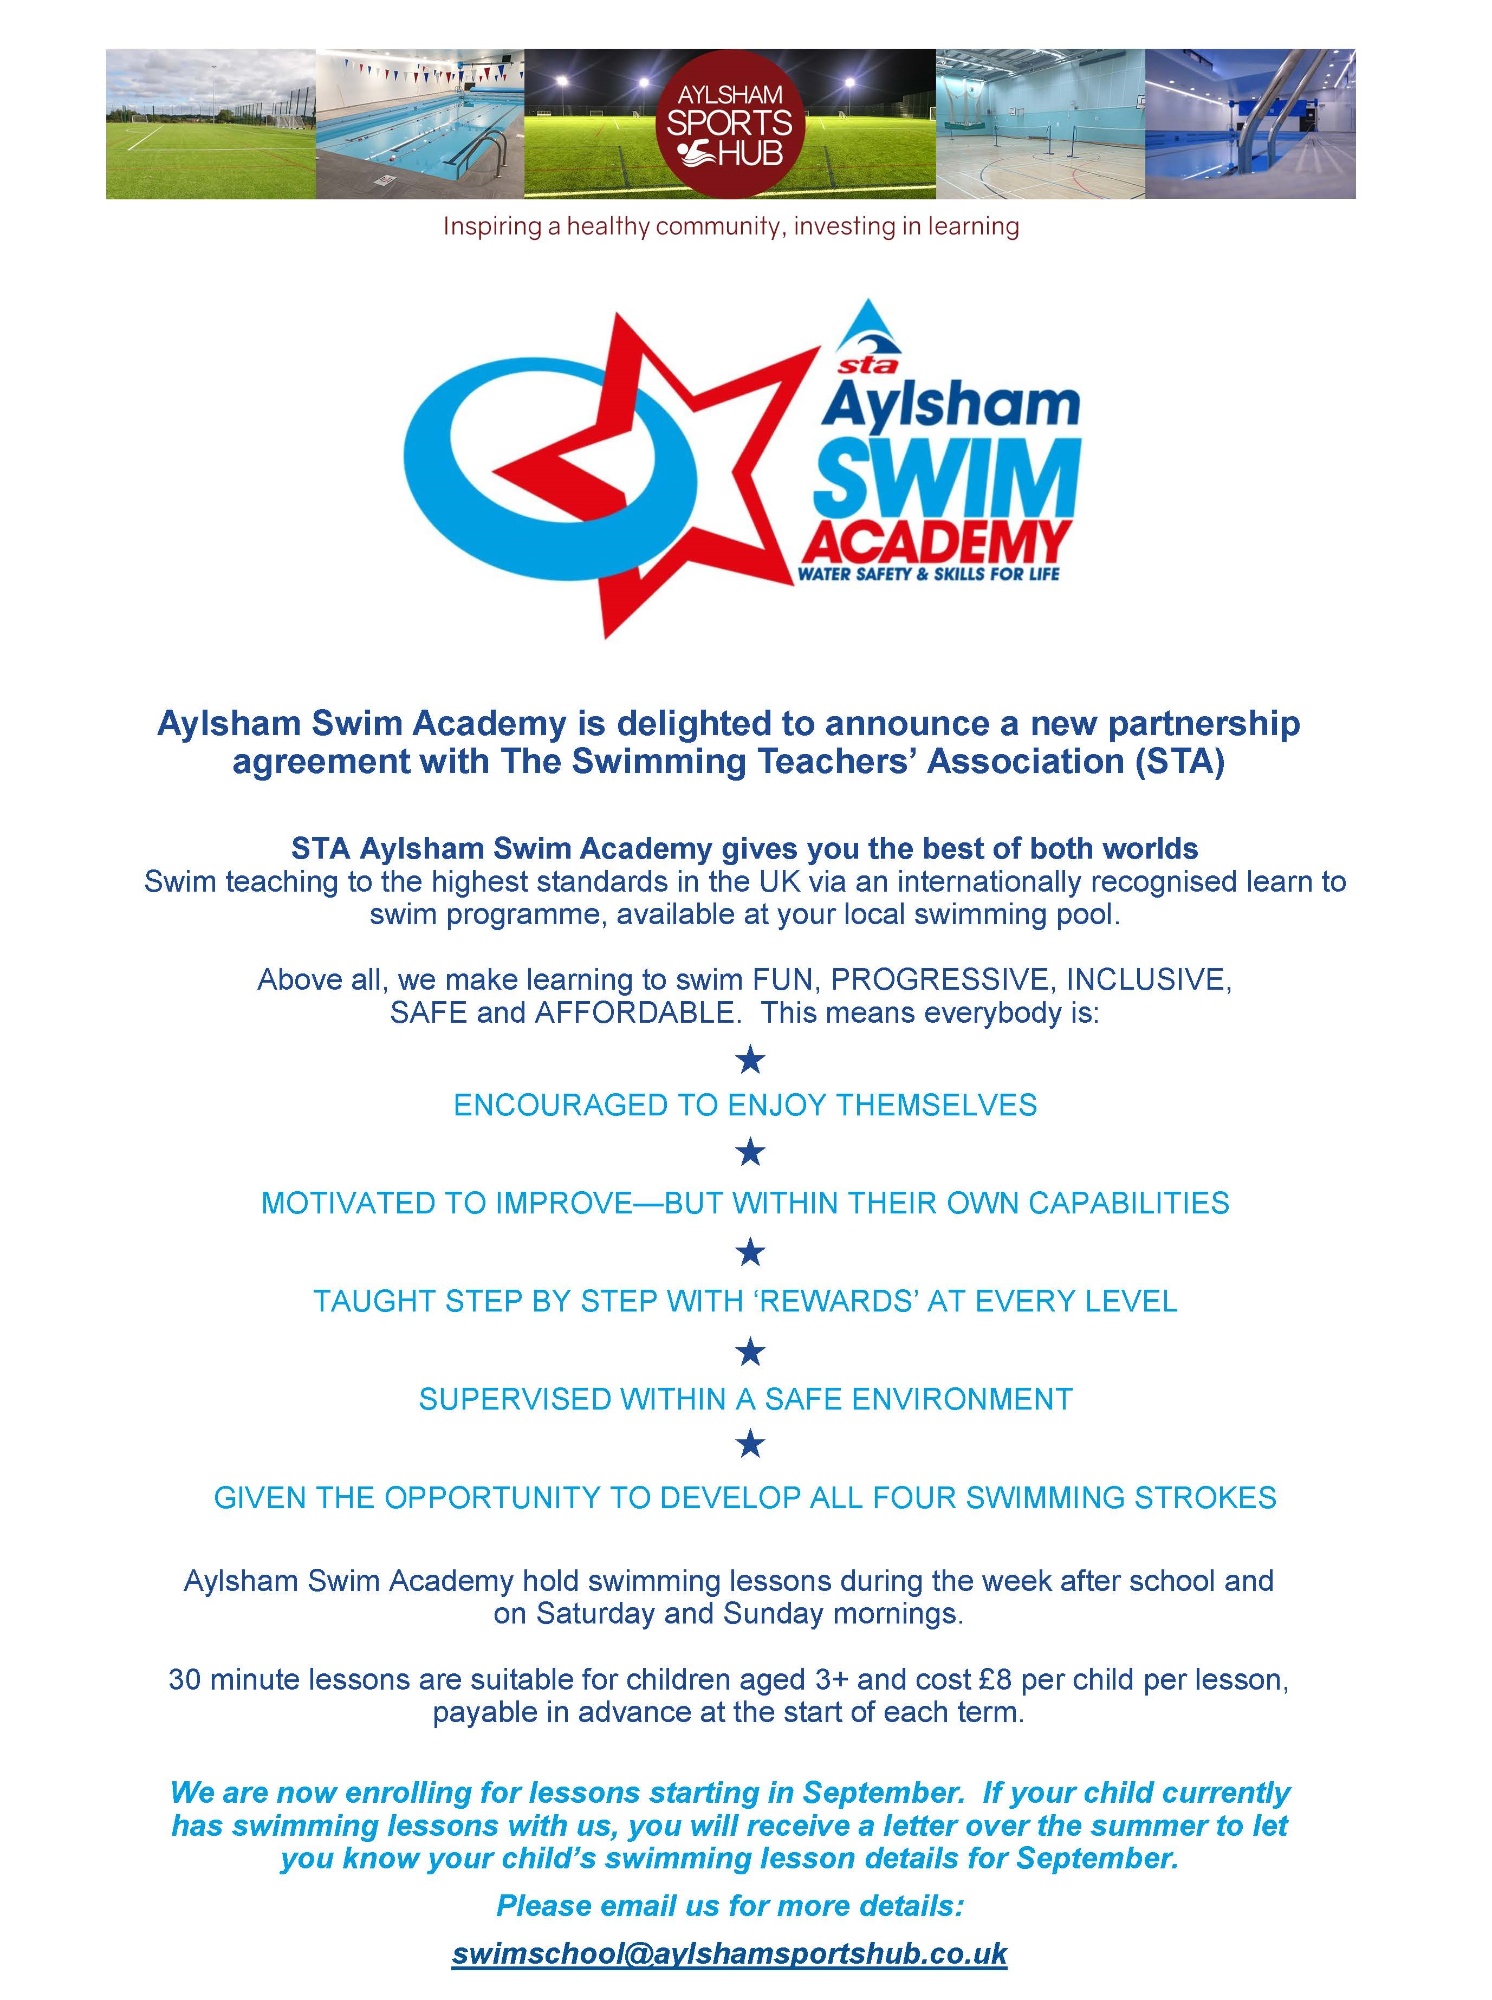 Aylsham Swim Academy Lessons